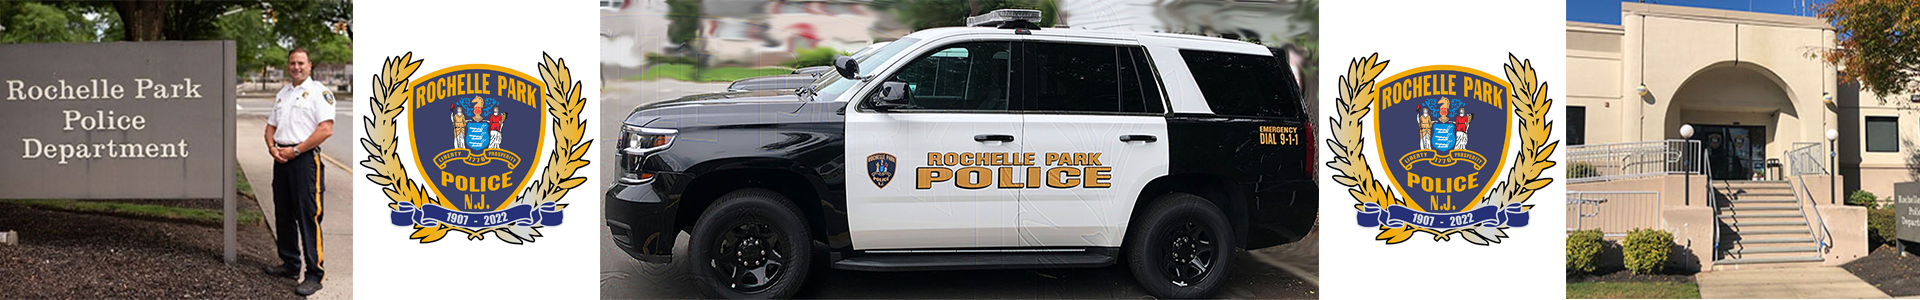 Rochelle Park Police Department , NJ Police Jobs